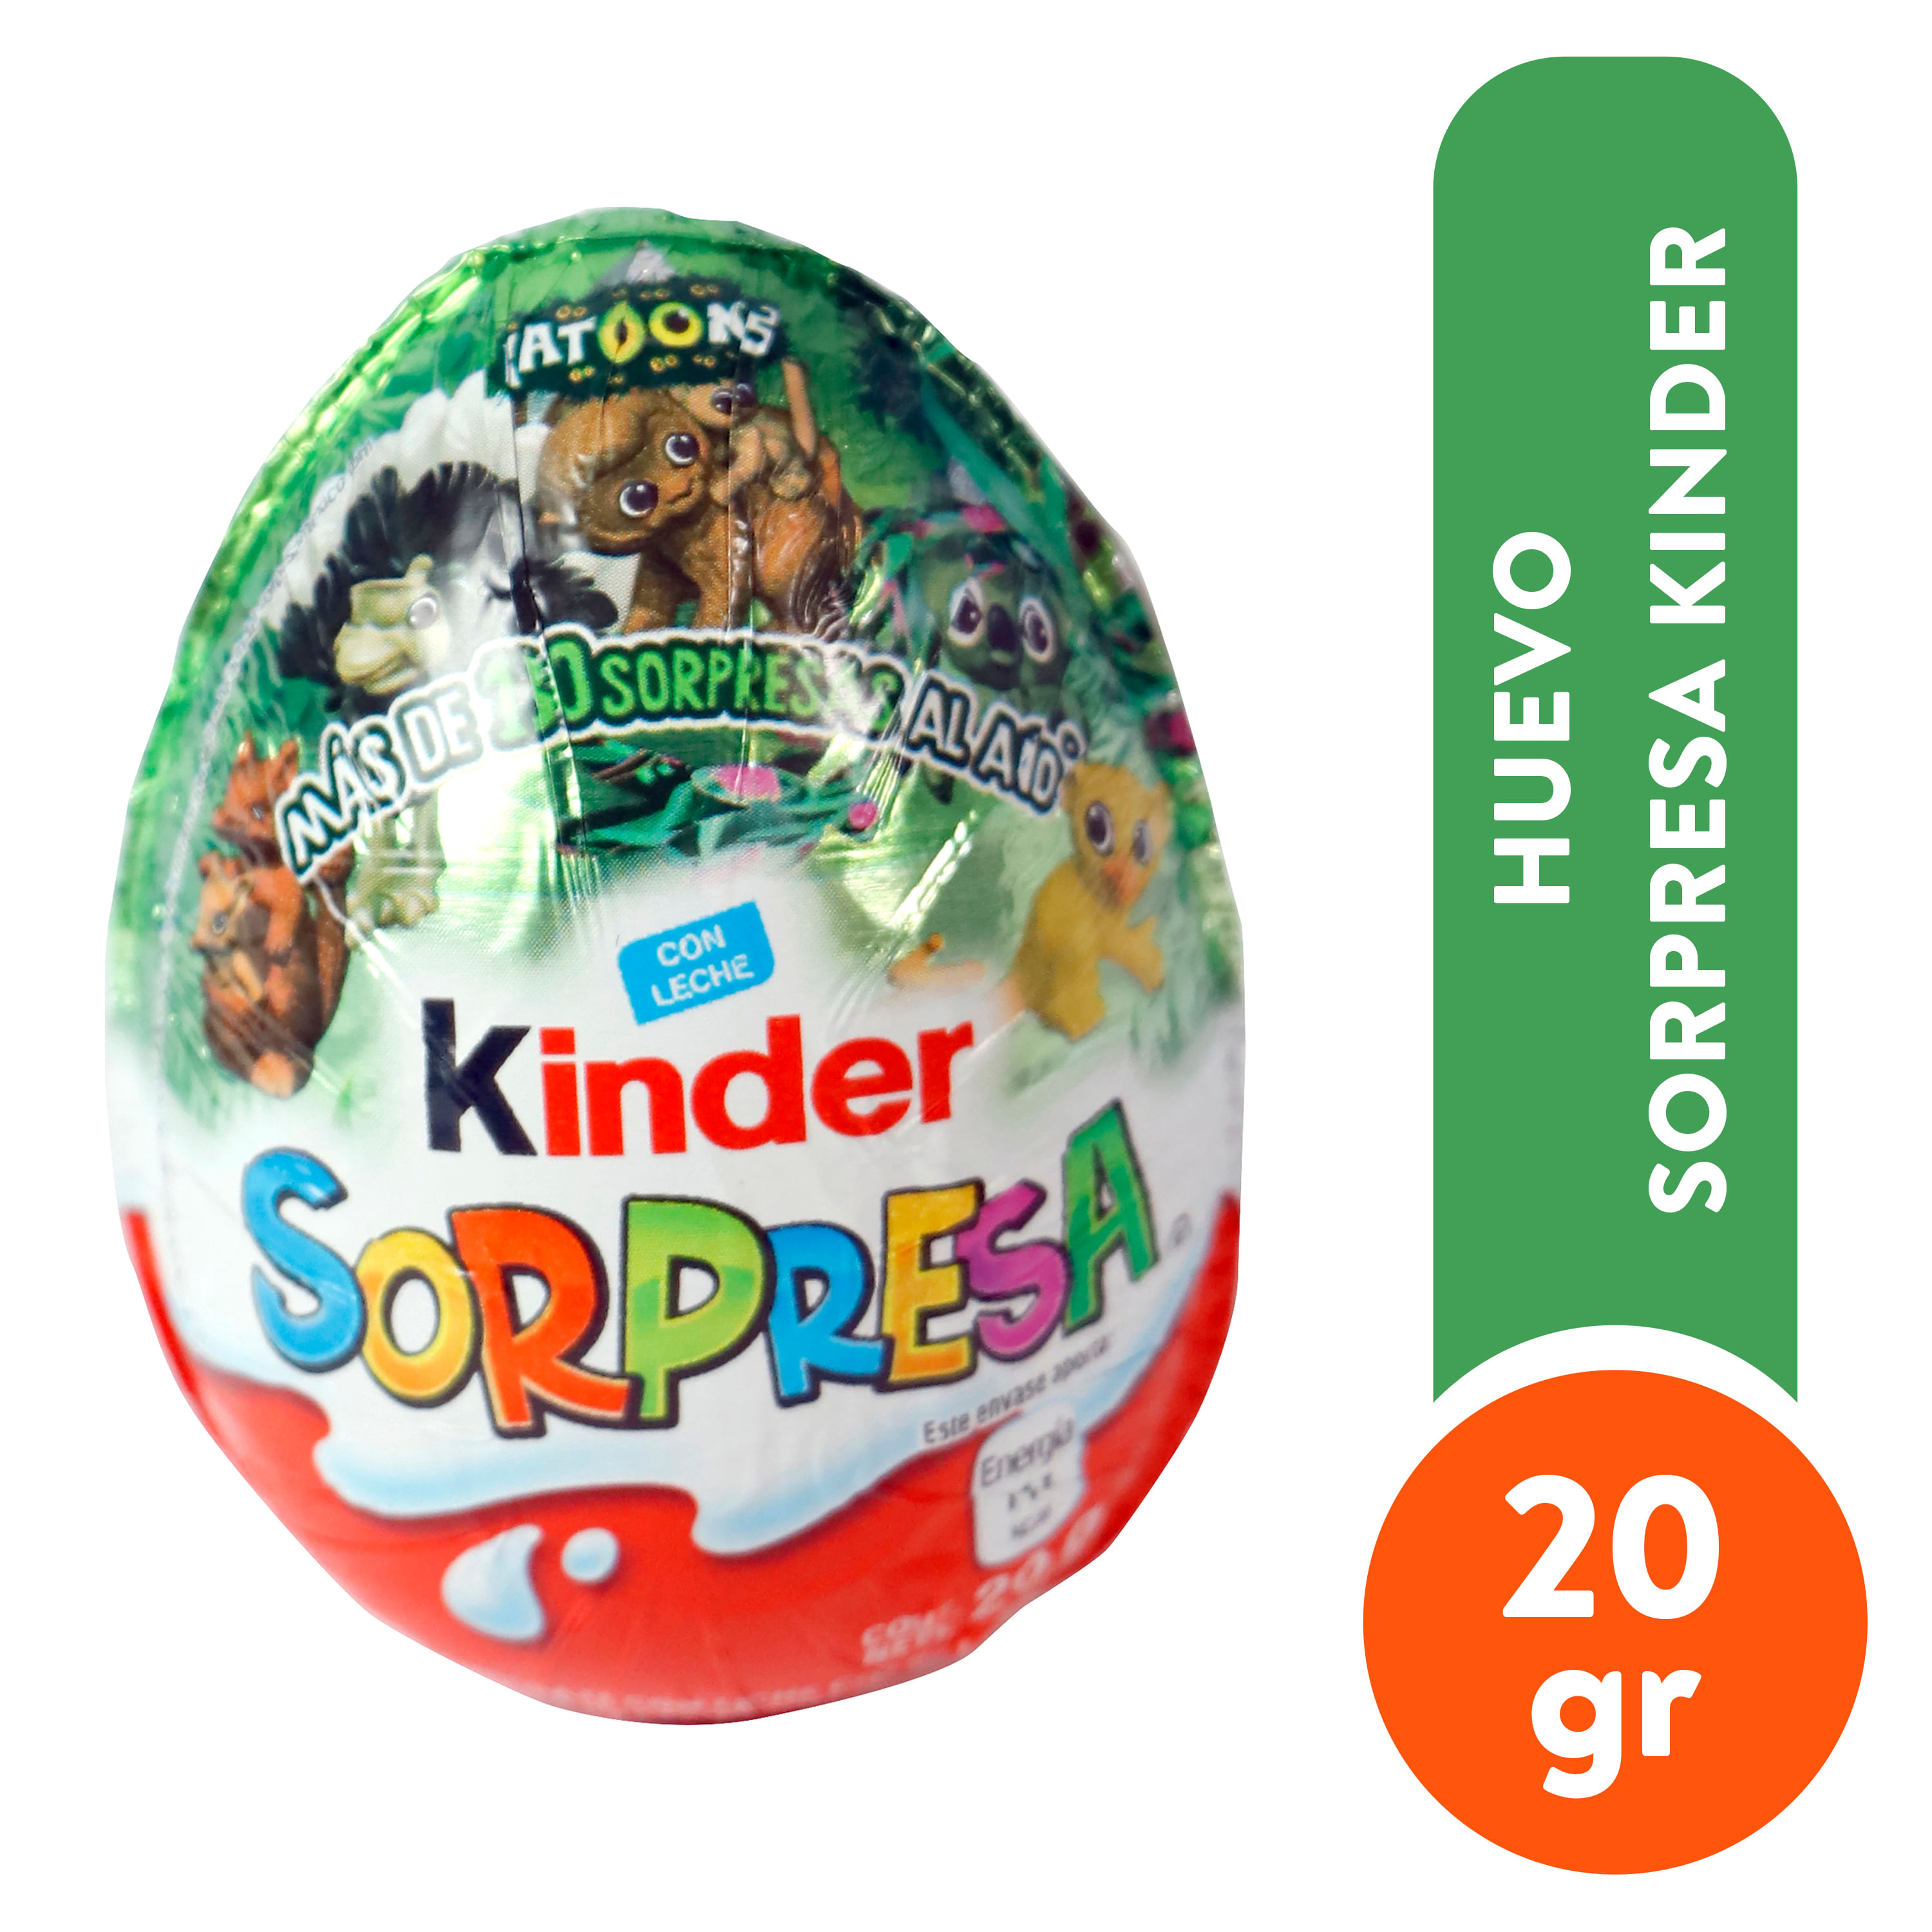 Chocolate-Kinder-Sorpresa-Natoons-20gr-1-44943